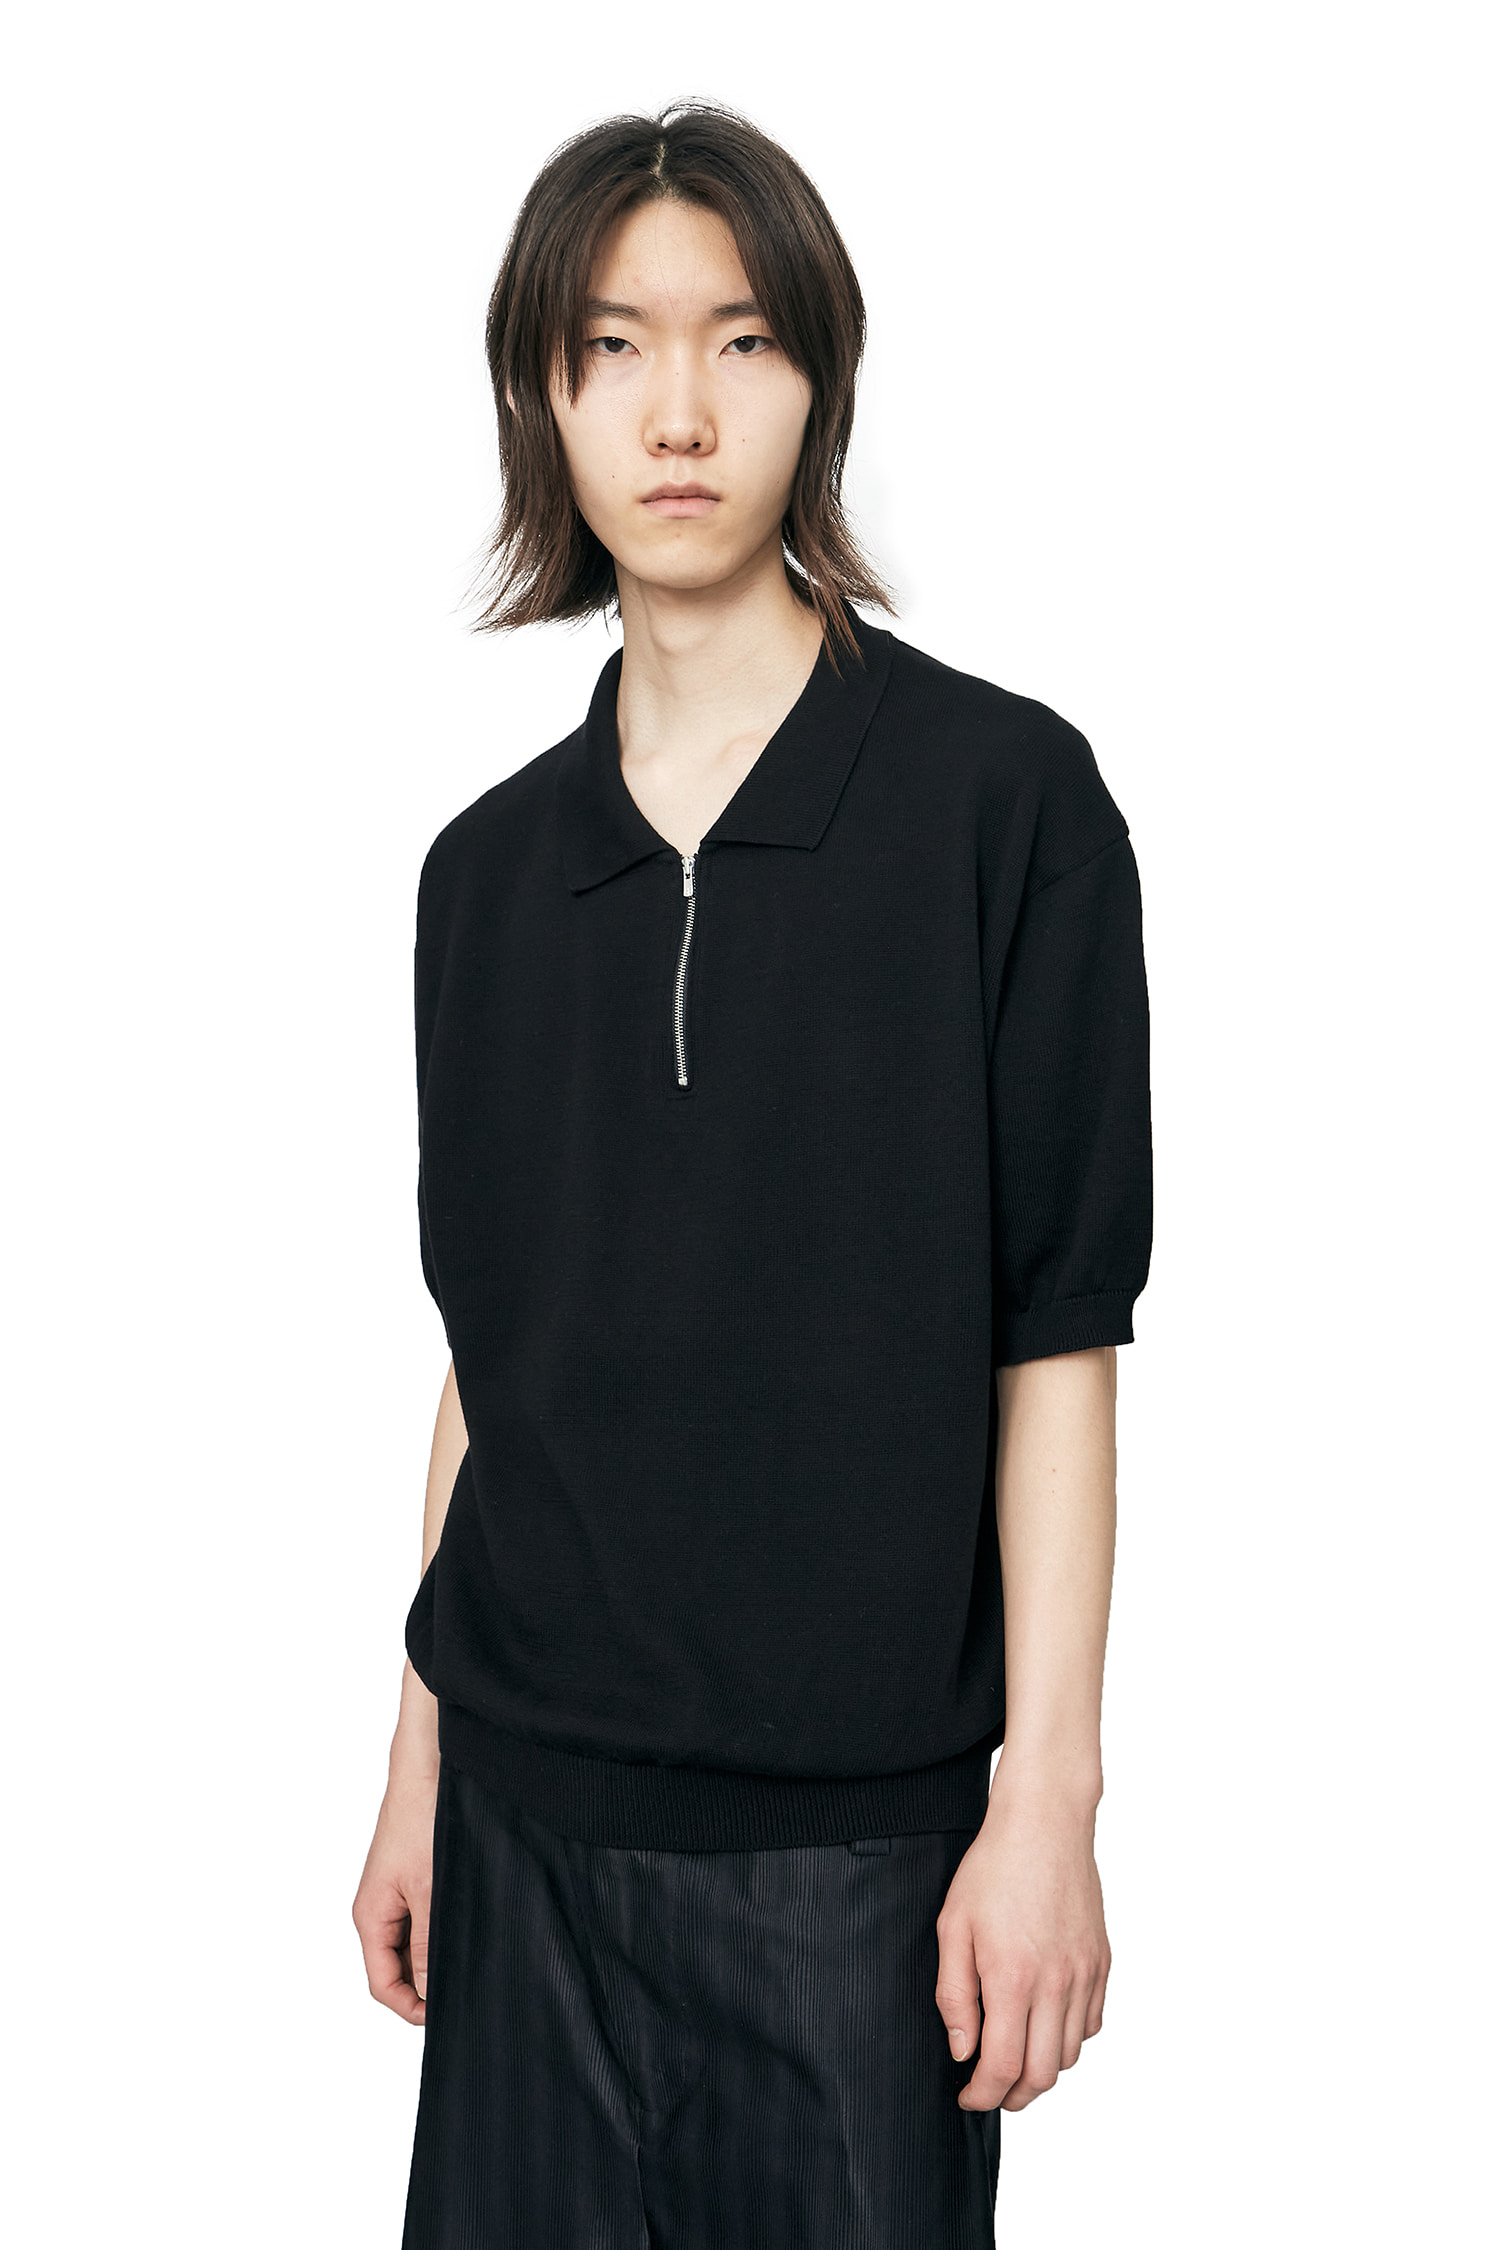 Short Sleeve Knit EXCELLA® Black